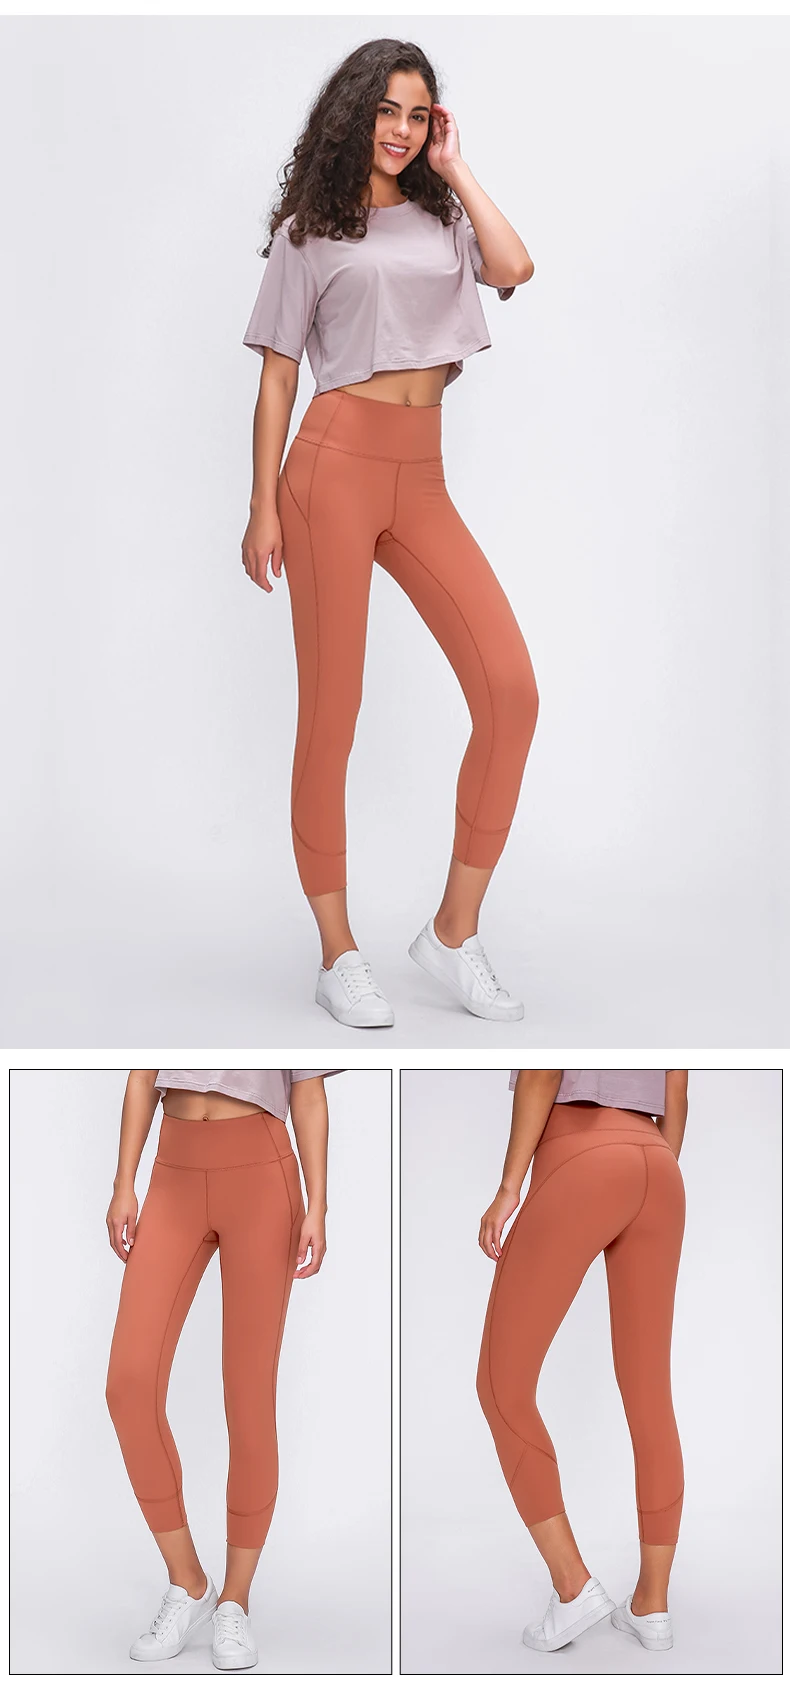 LuluGirl Yoga Fitness pants honey peach hip high waist hip lifting tights running sports tights women's summer 5 / 9 pants cropped leggings